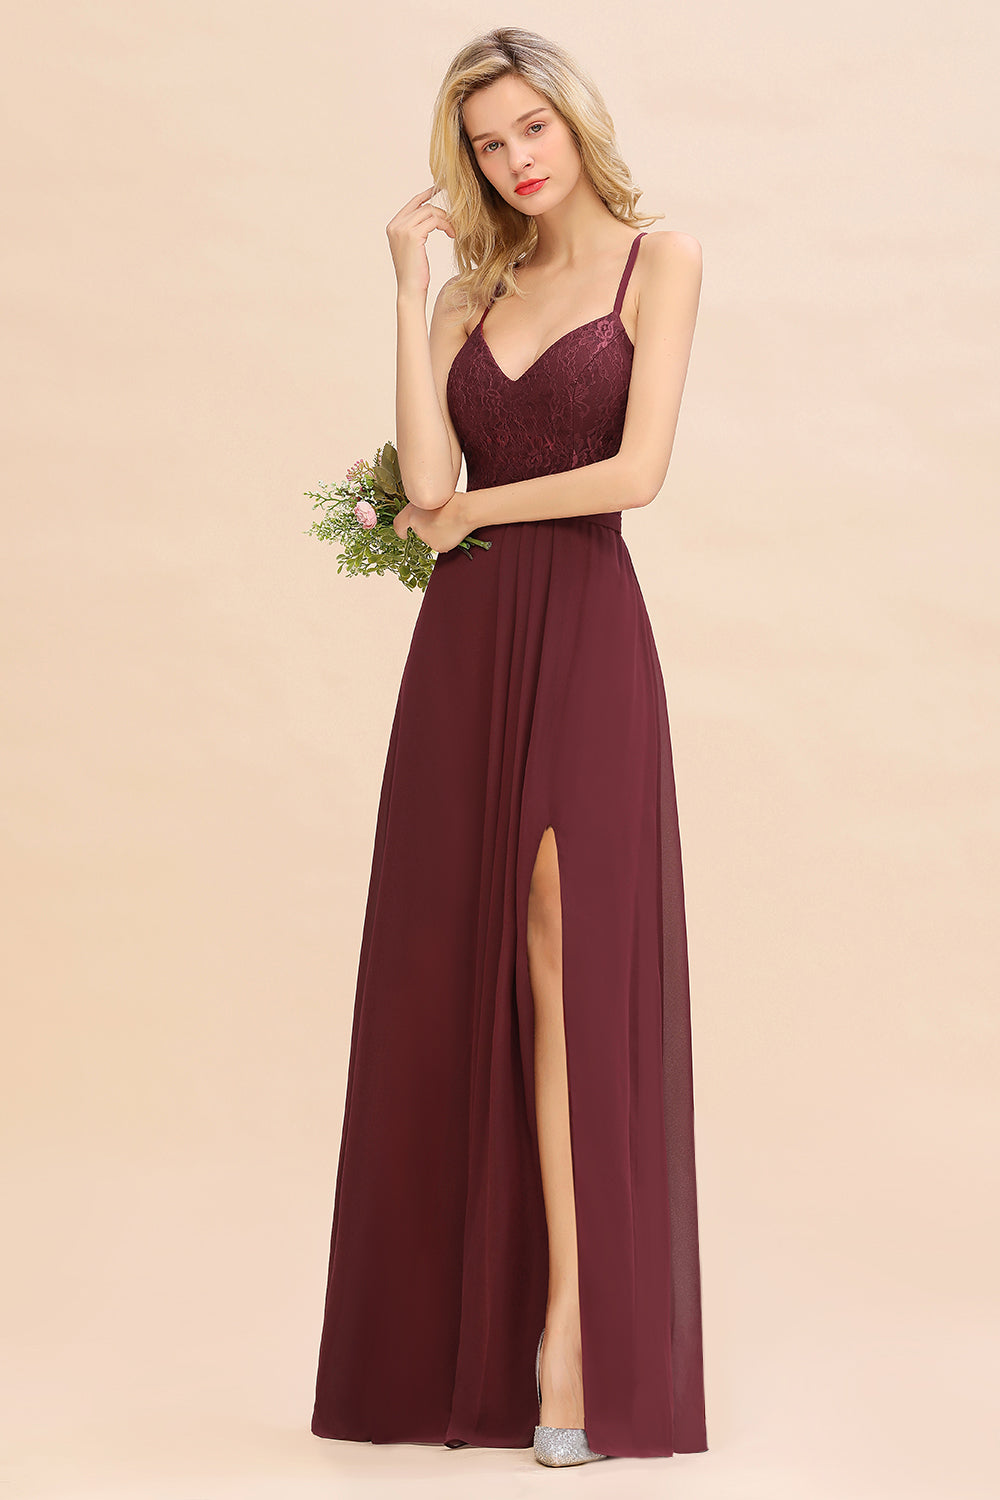 Elegant CrissCross Back Burgundy Lace Bridesmaid Dress With Spaghetti Straps-27dress